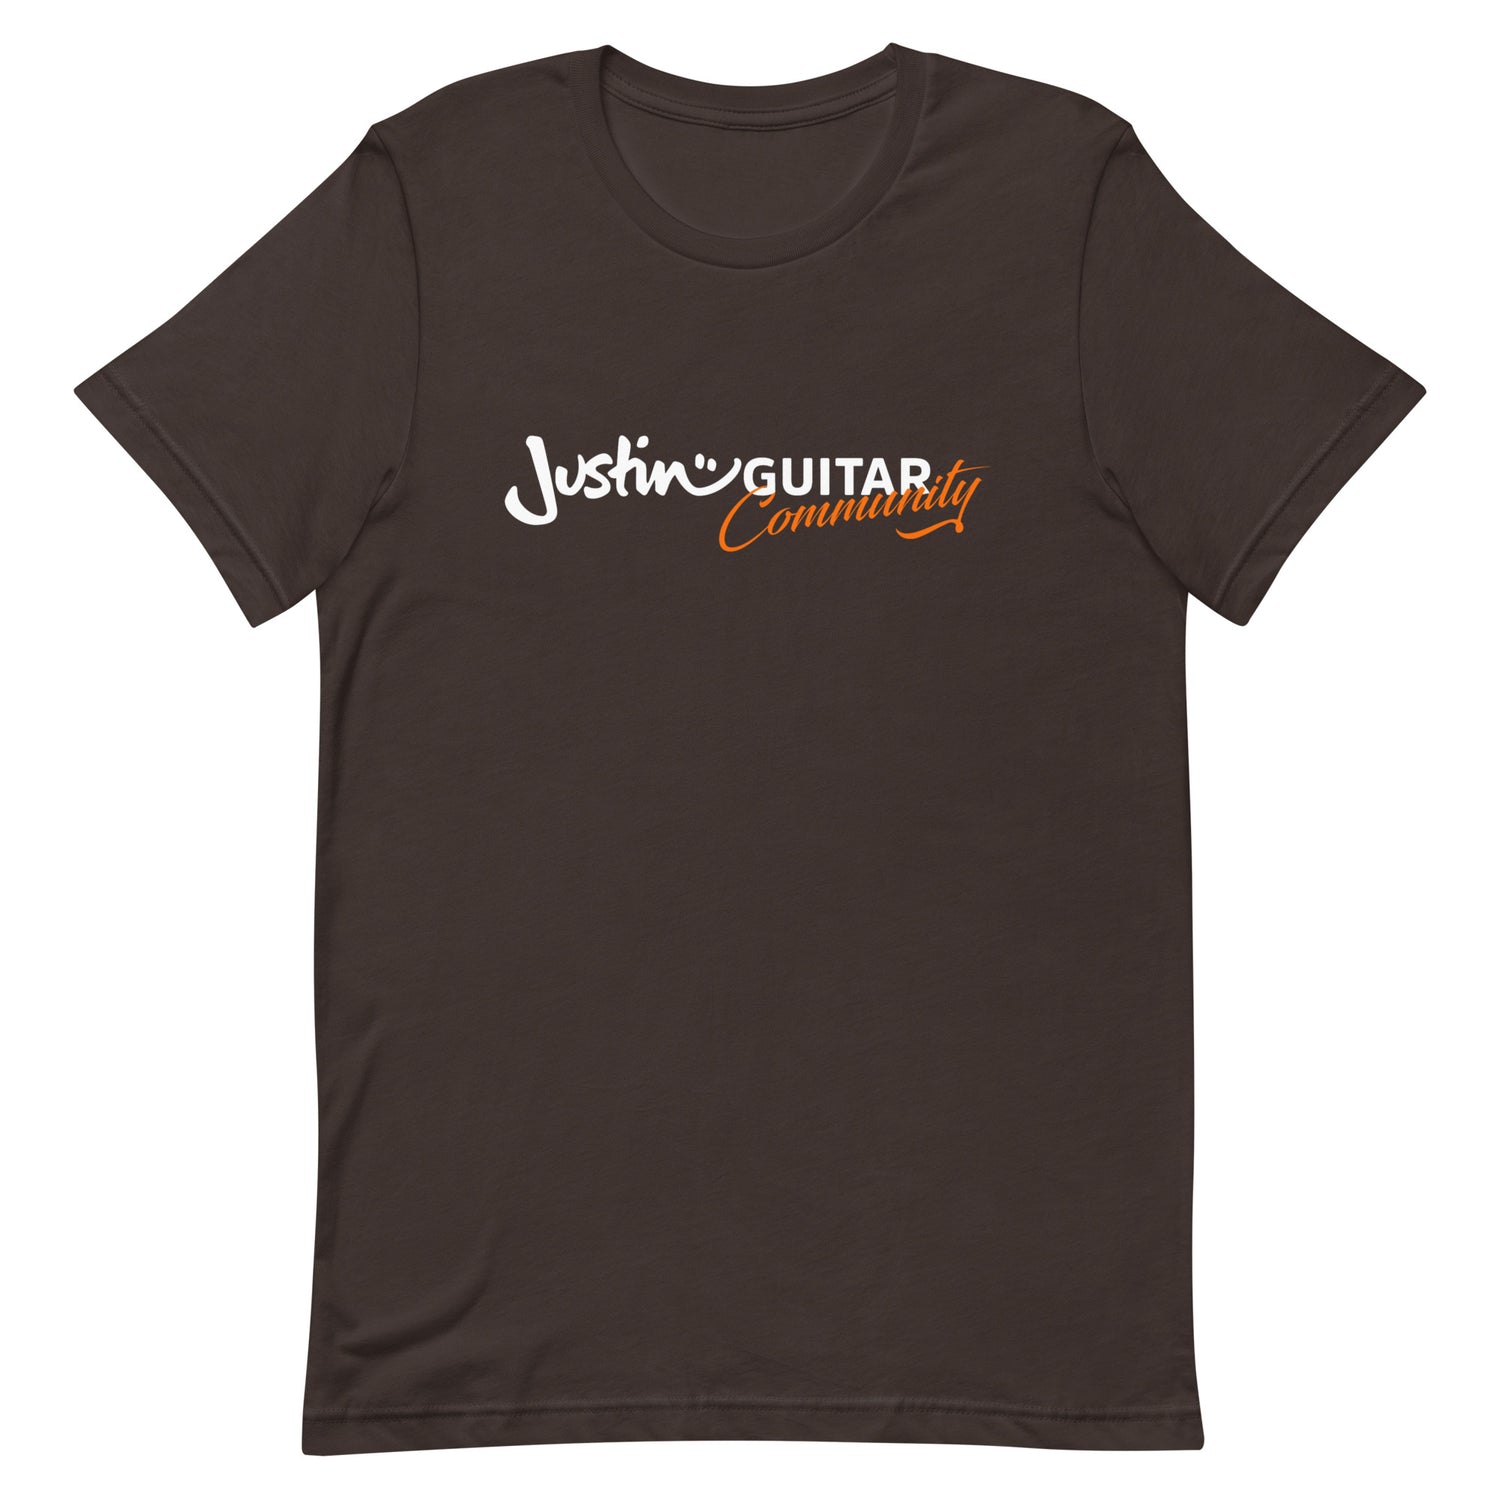 Brown tshirt with JustinGuitar Community logo.